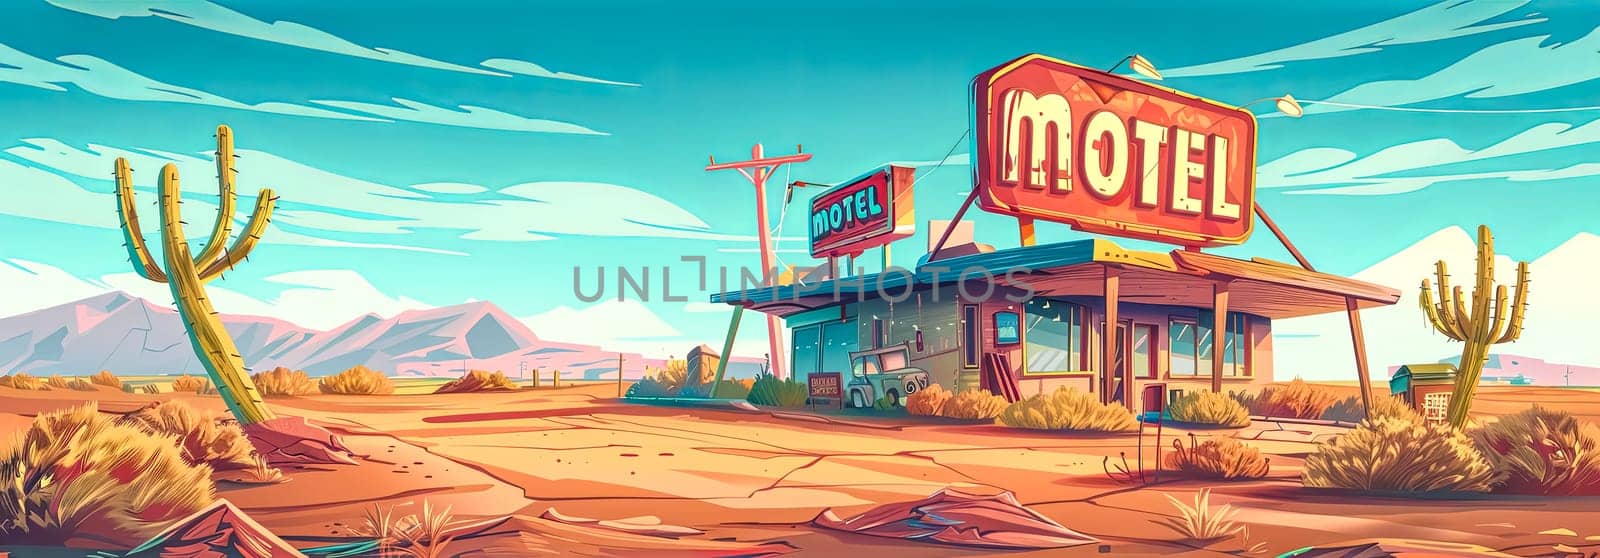 Colorful artwork of a vintage motel sign in a stylized desert landscape by Edophoto